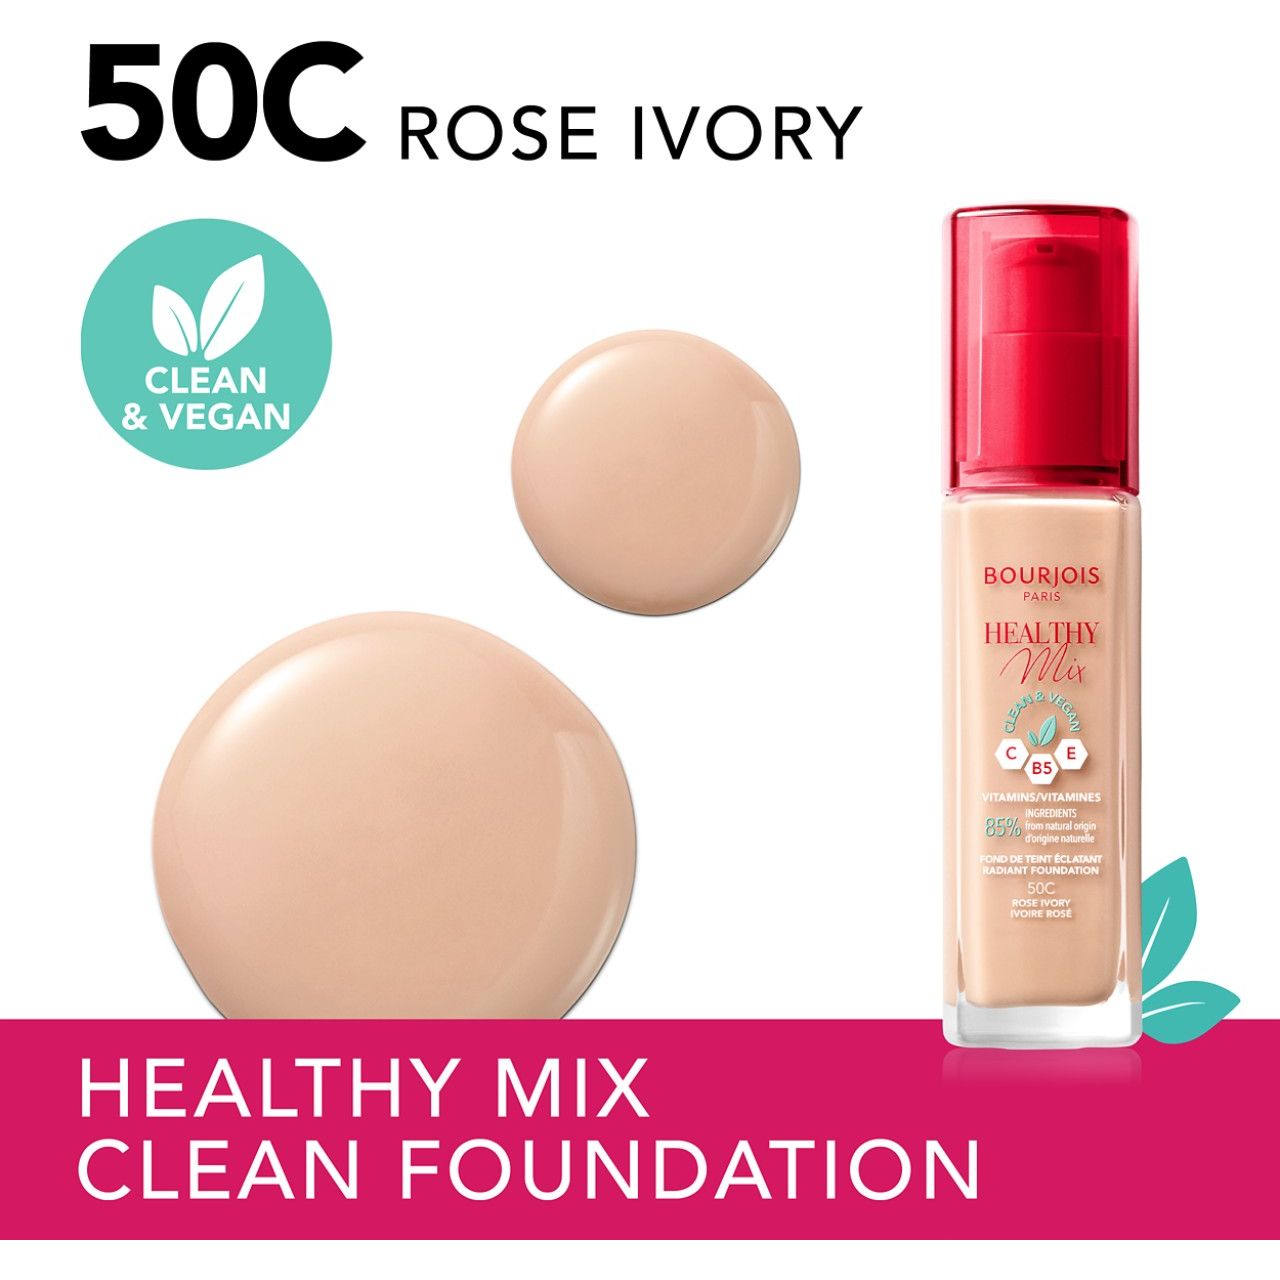 Тональная основа Bourjois Healthy Mix Clean & Vegan тон 50C (Rose Ivory) 30 мл - фото 3